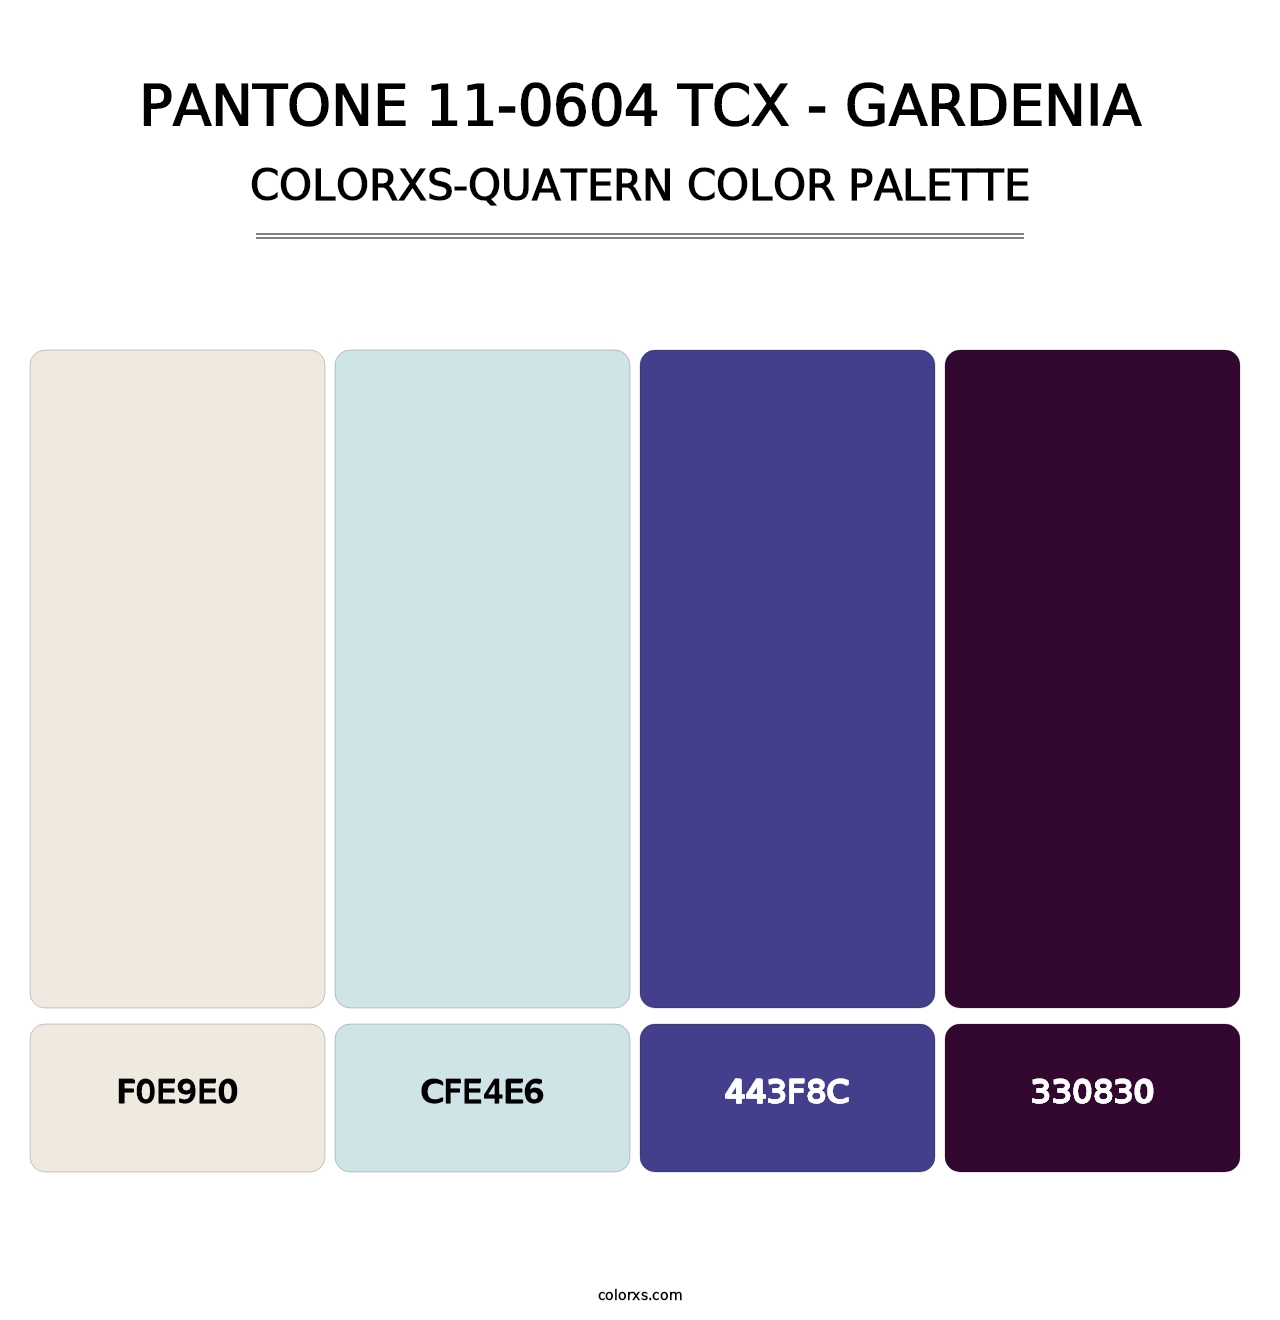 PANTONE 11-0604 TCX - Gardenia - Colorxs Quatern Palette